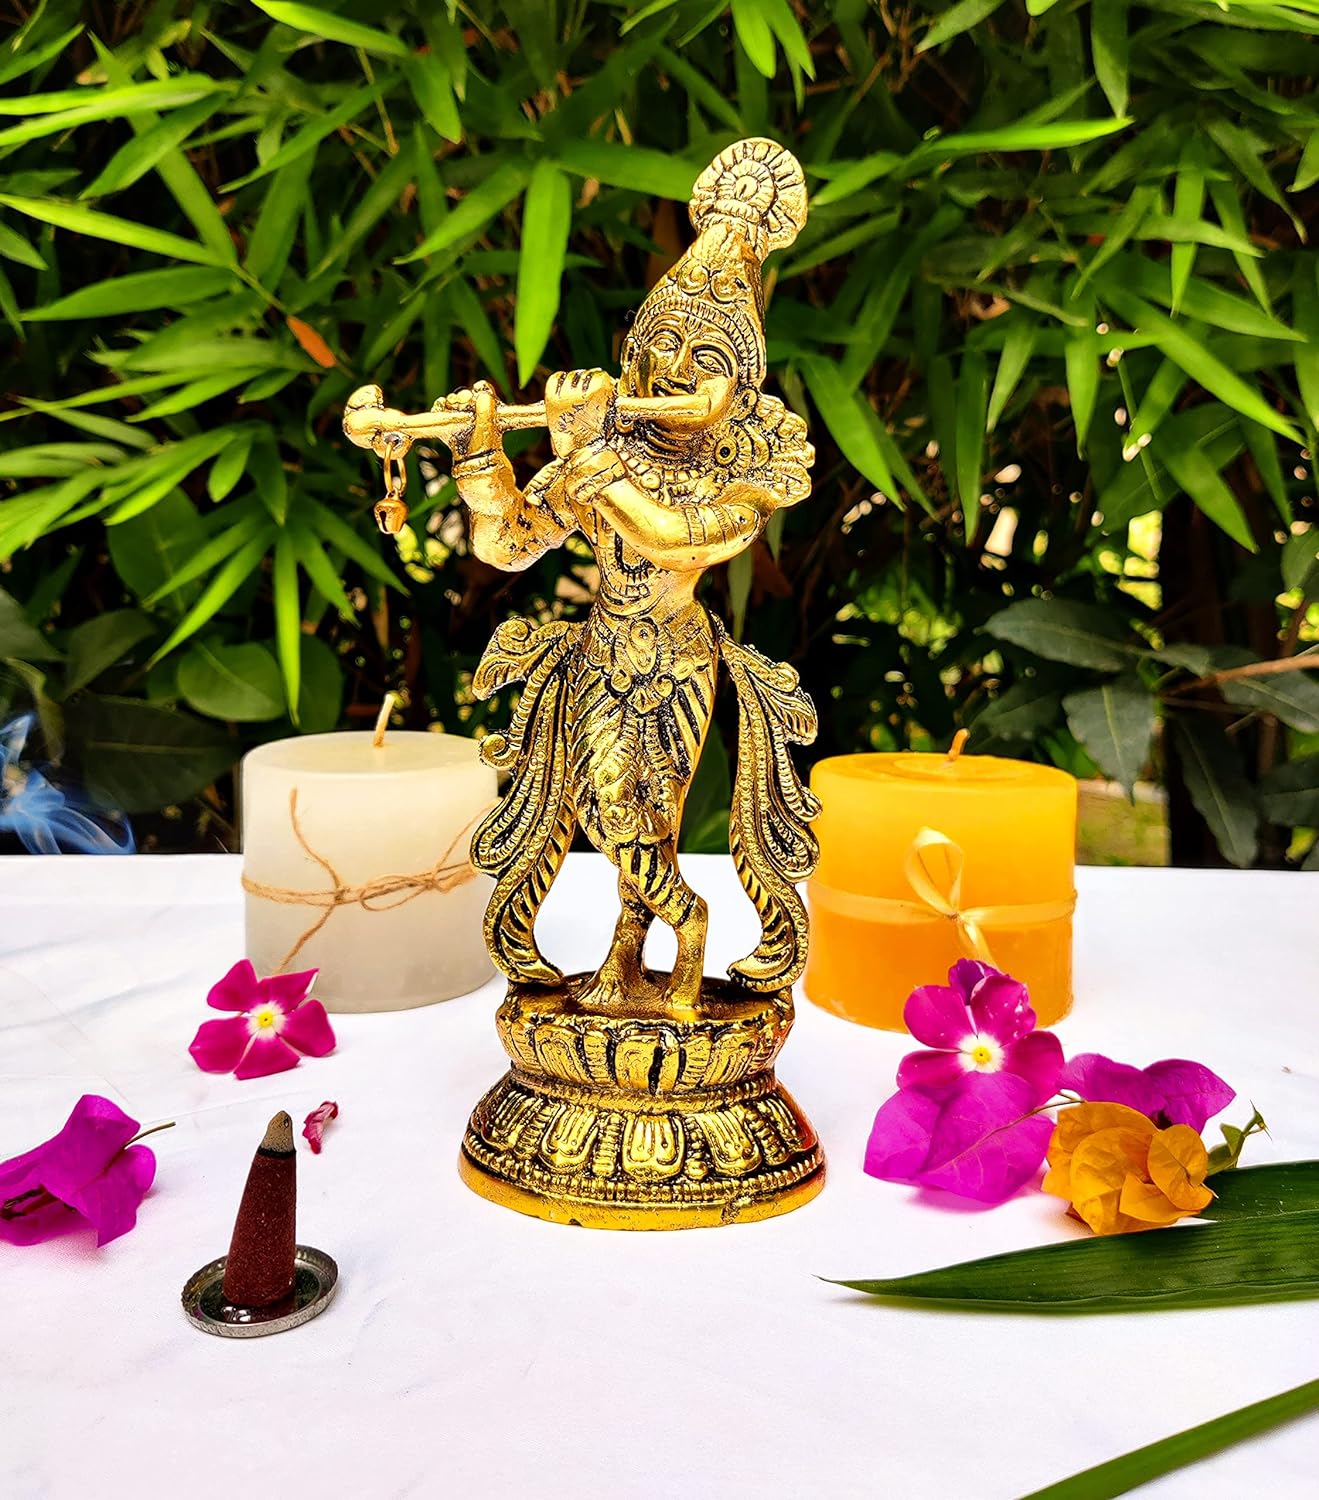 WC_Lord Krishna with bansuri Janmashtami Krishna Statue Figurine with murli Bansi-Hindu God of Love and Divine Joy-Murlidhar Kishna Idol for Indian Religious Festival– Home Decor Item